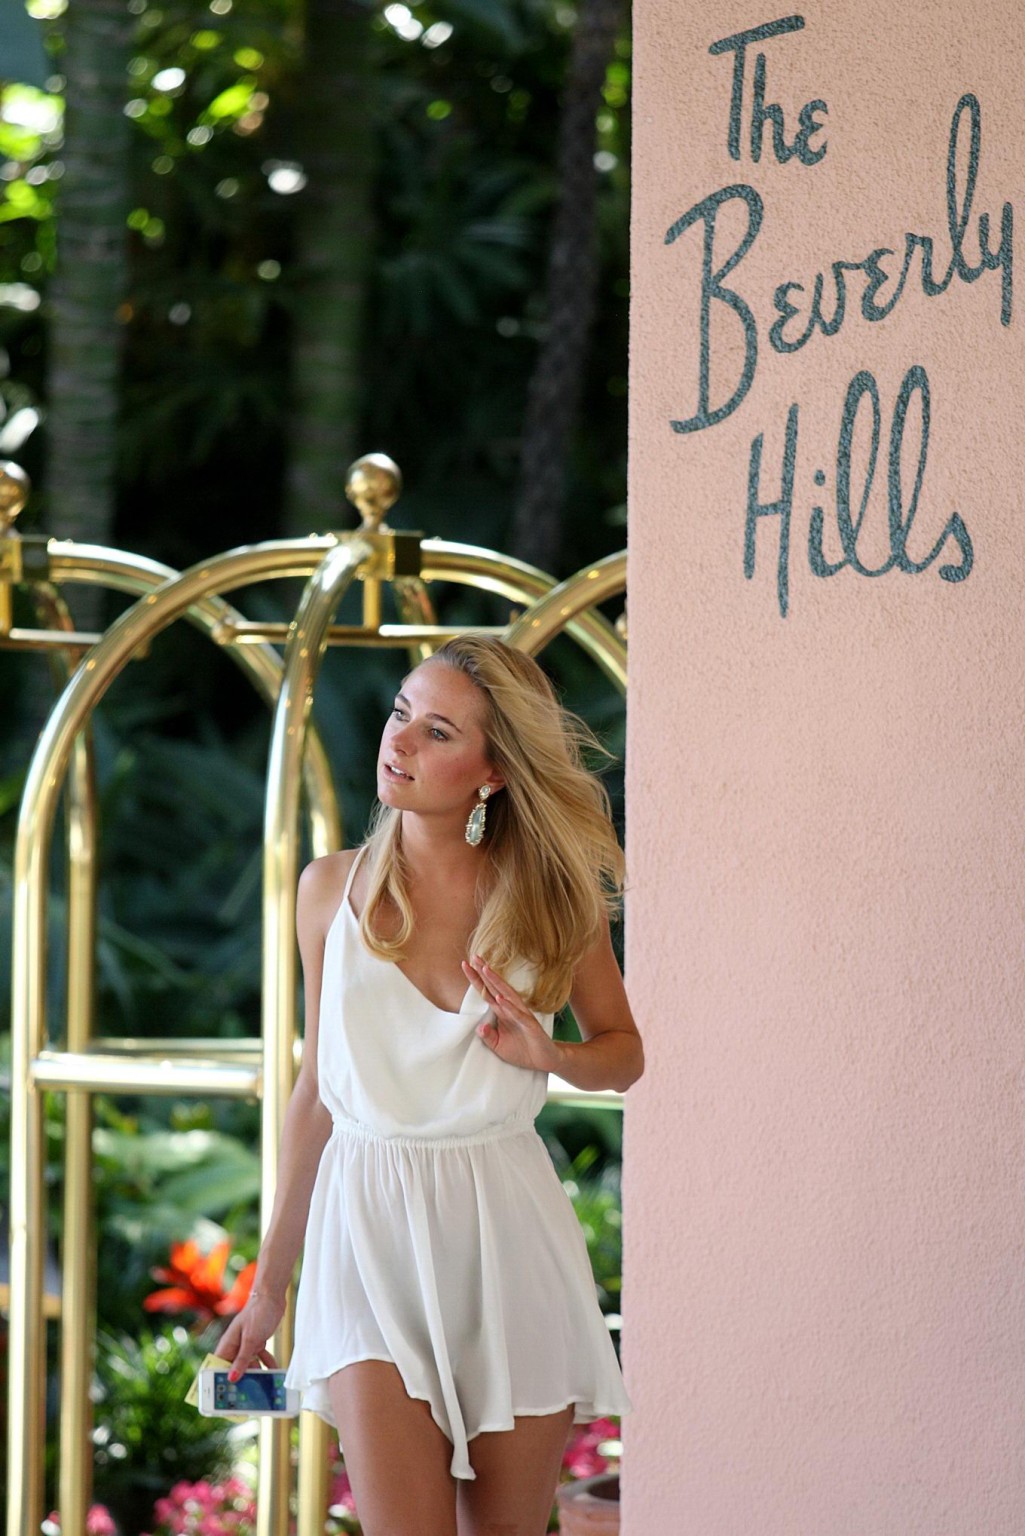 Kimberley Garner leggy wearing white mini dress outside the Beverly Hills Hotel #75196294